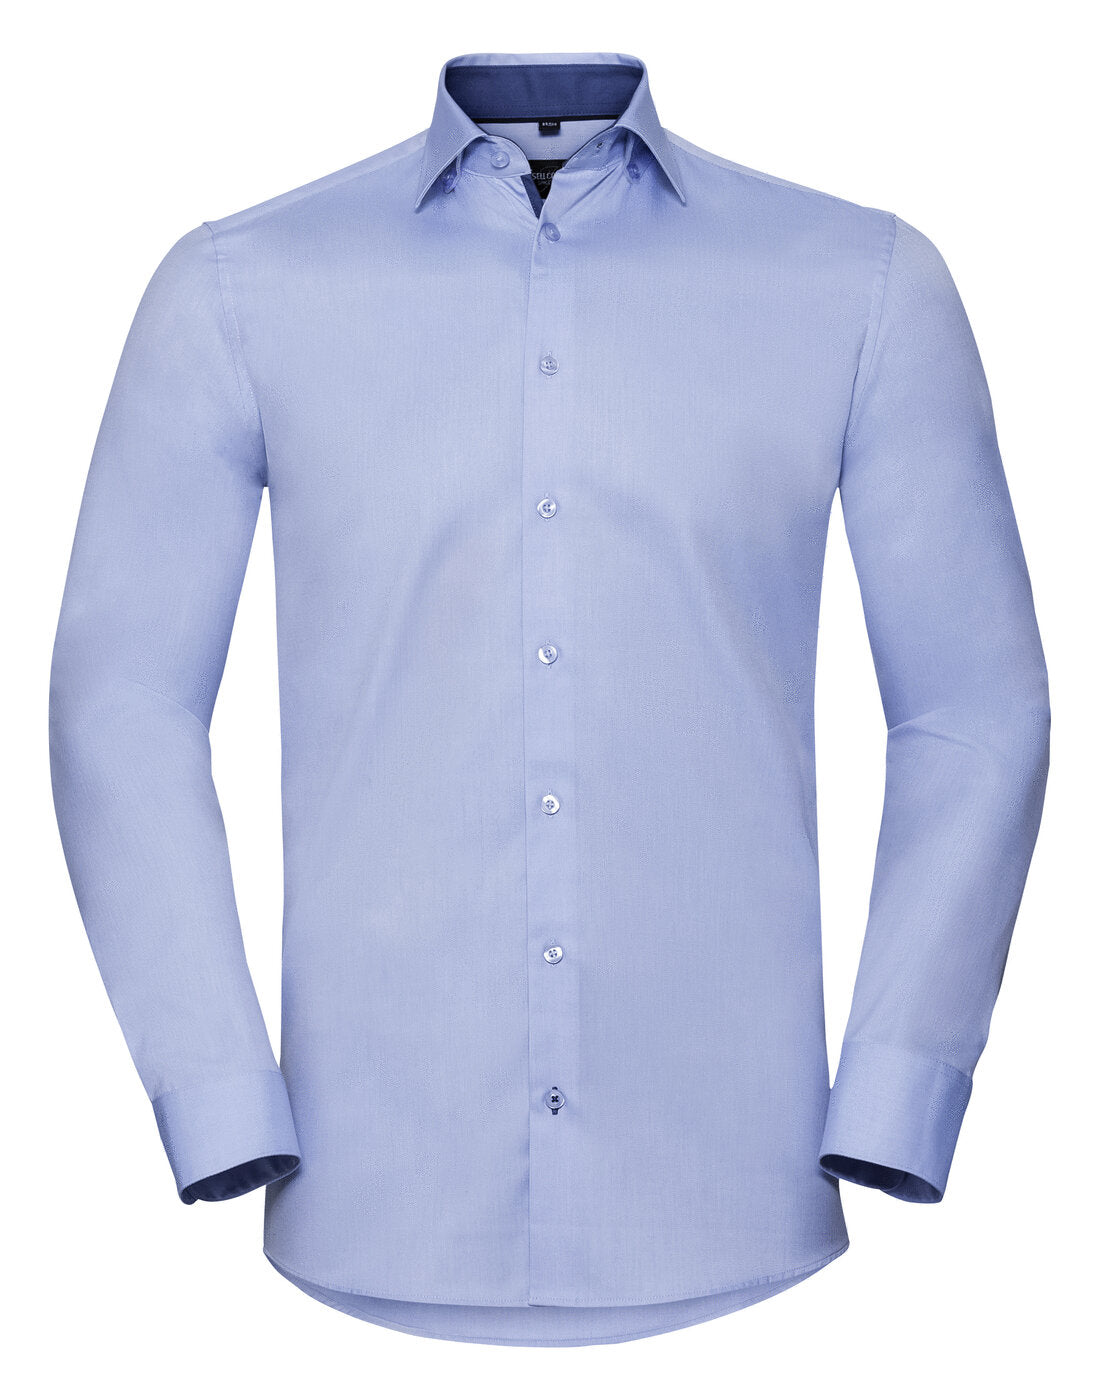 Russell Long Sleeve Tailored Contrast Herringbone Shirt - Light Blue/Mid Blue/Bright Navy